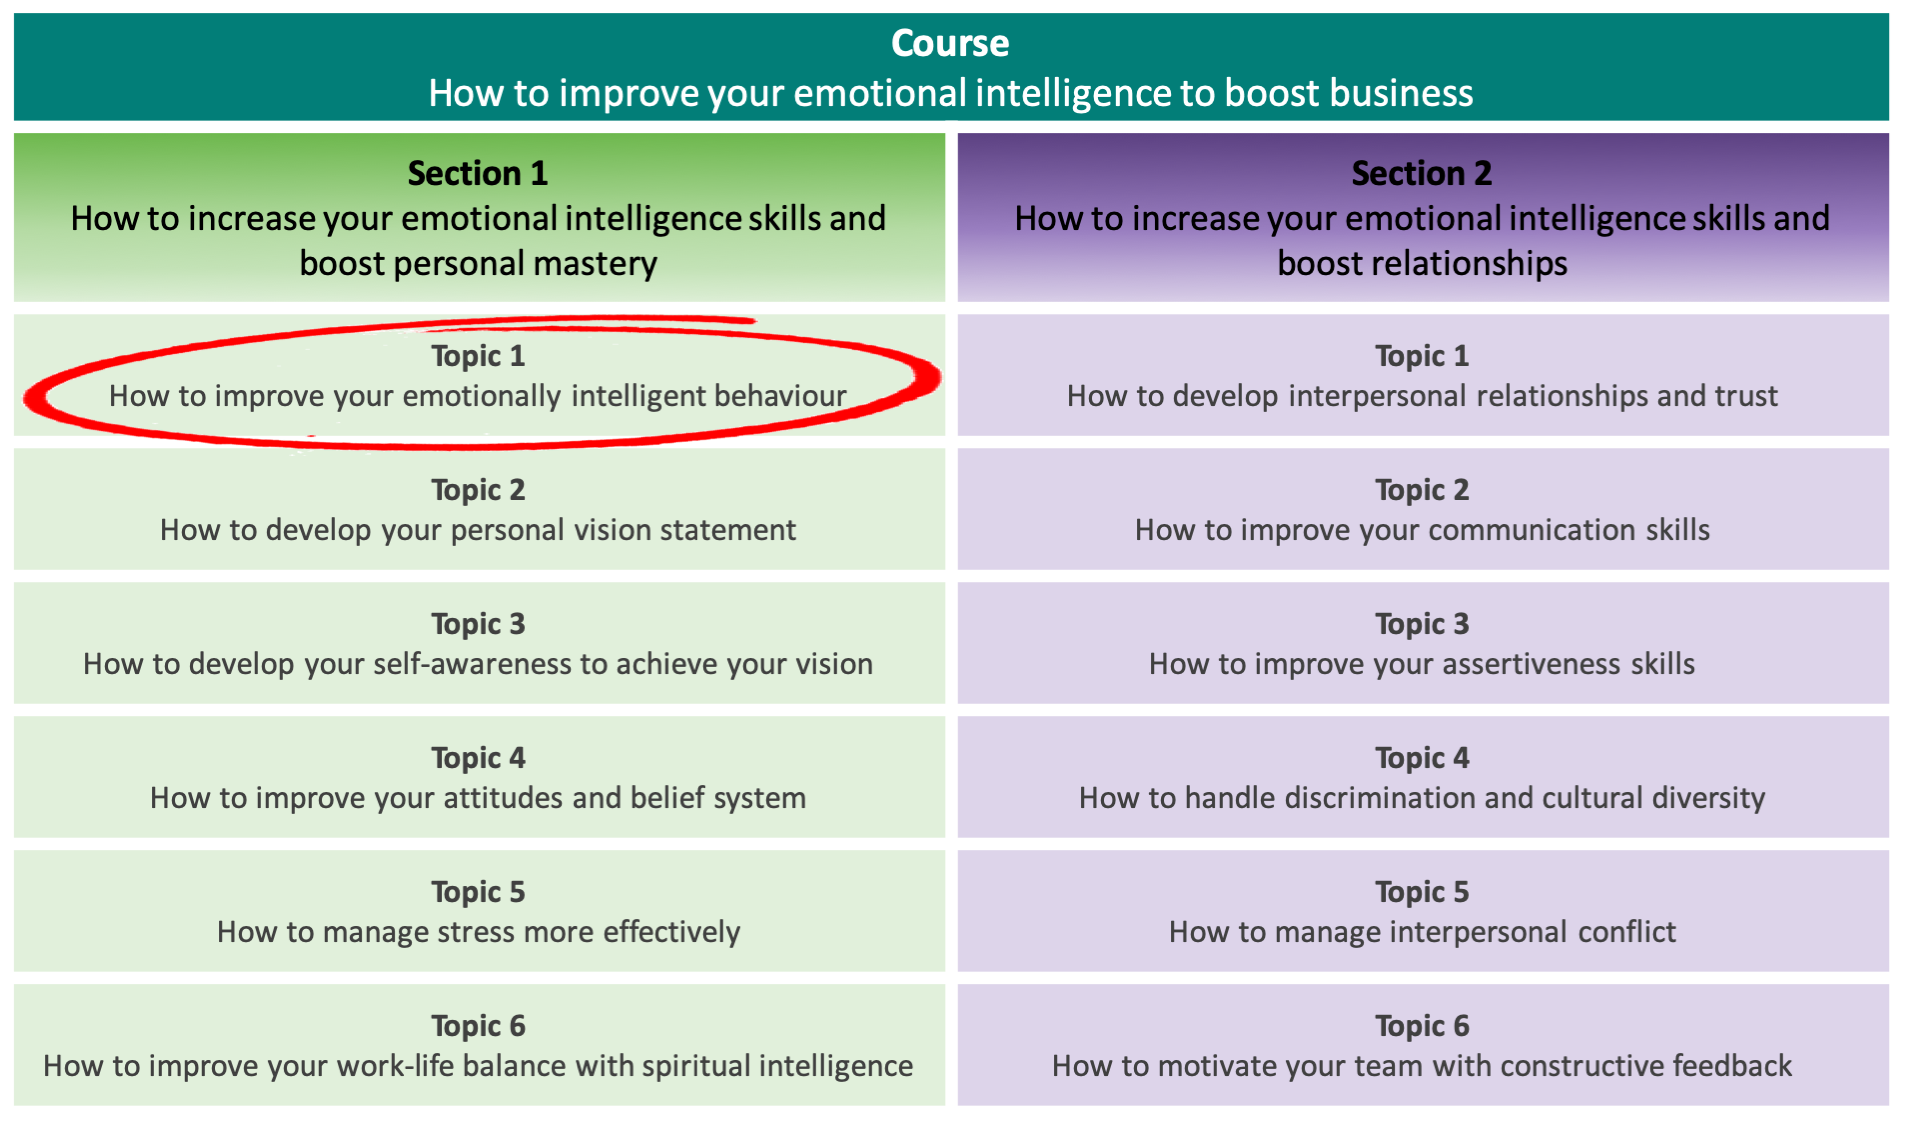 How to improve your emotionally intelligent behaviour